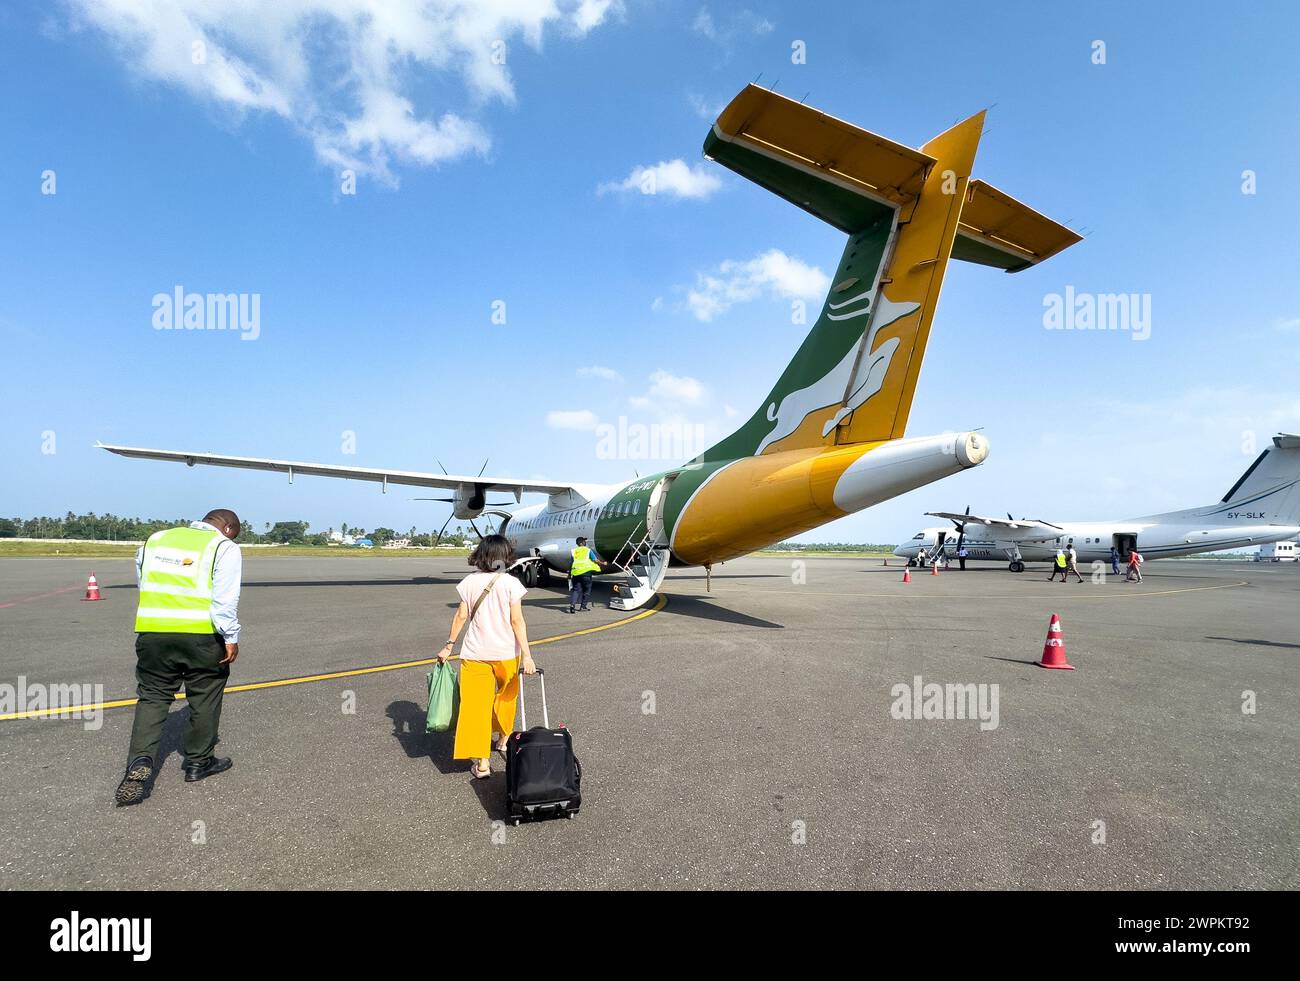 Passengers board a plane for a domestic flight at Zanzibar airport, Zanzibar, Tanzania Stock Photo